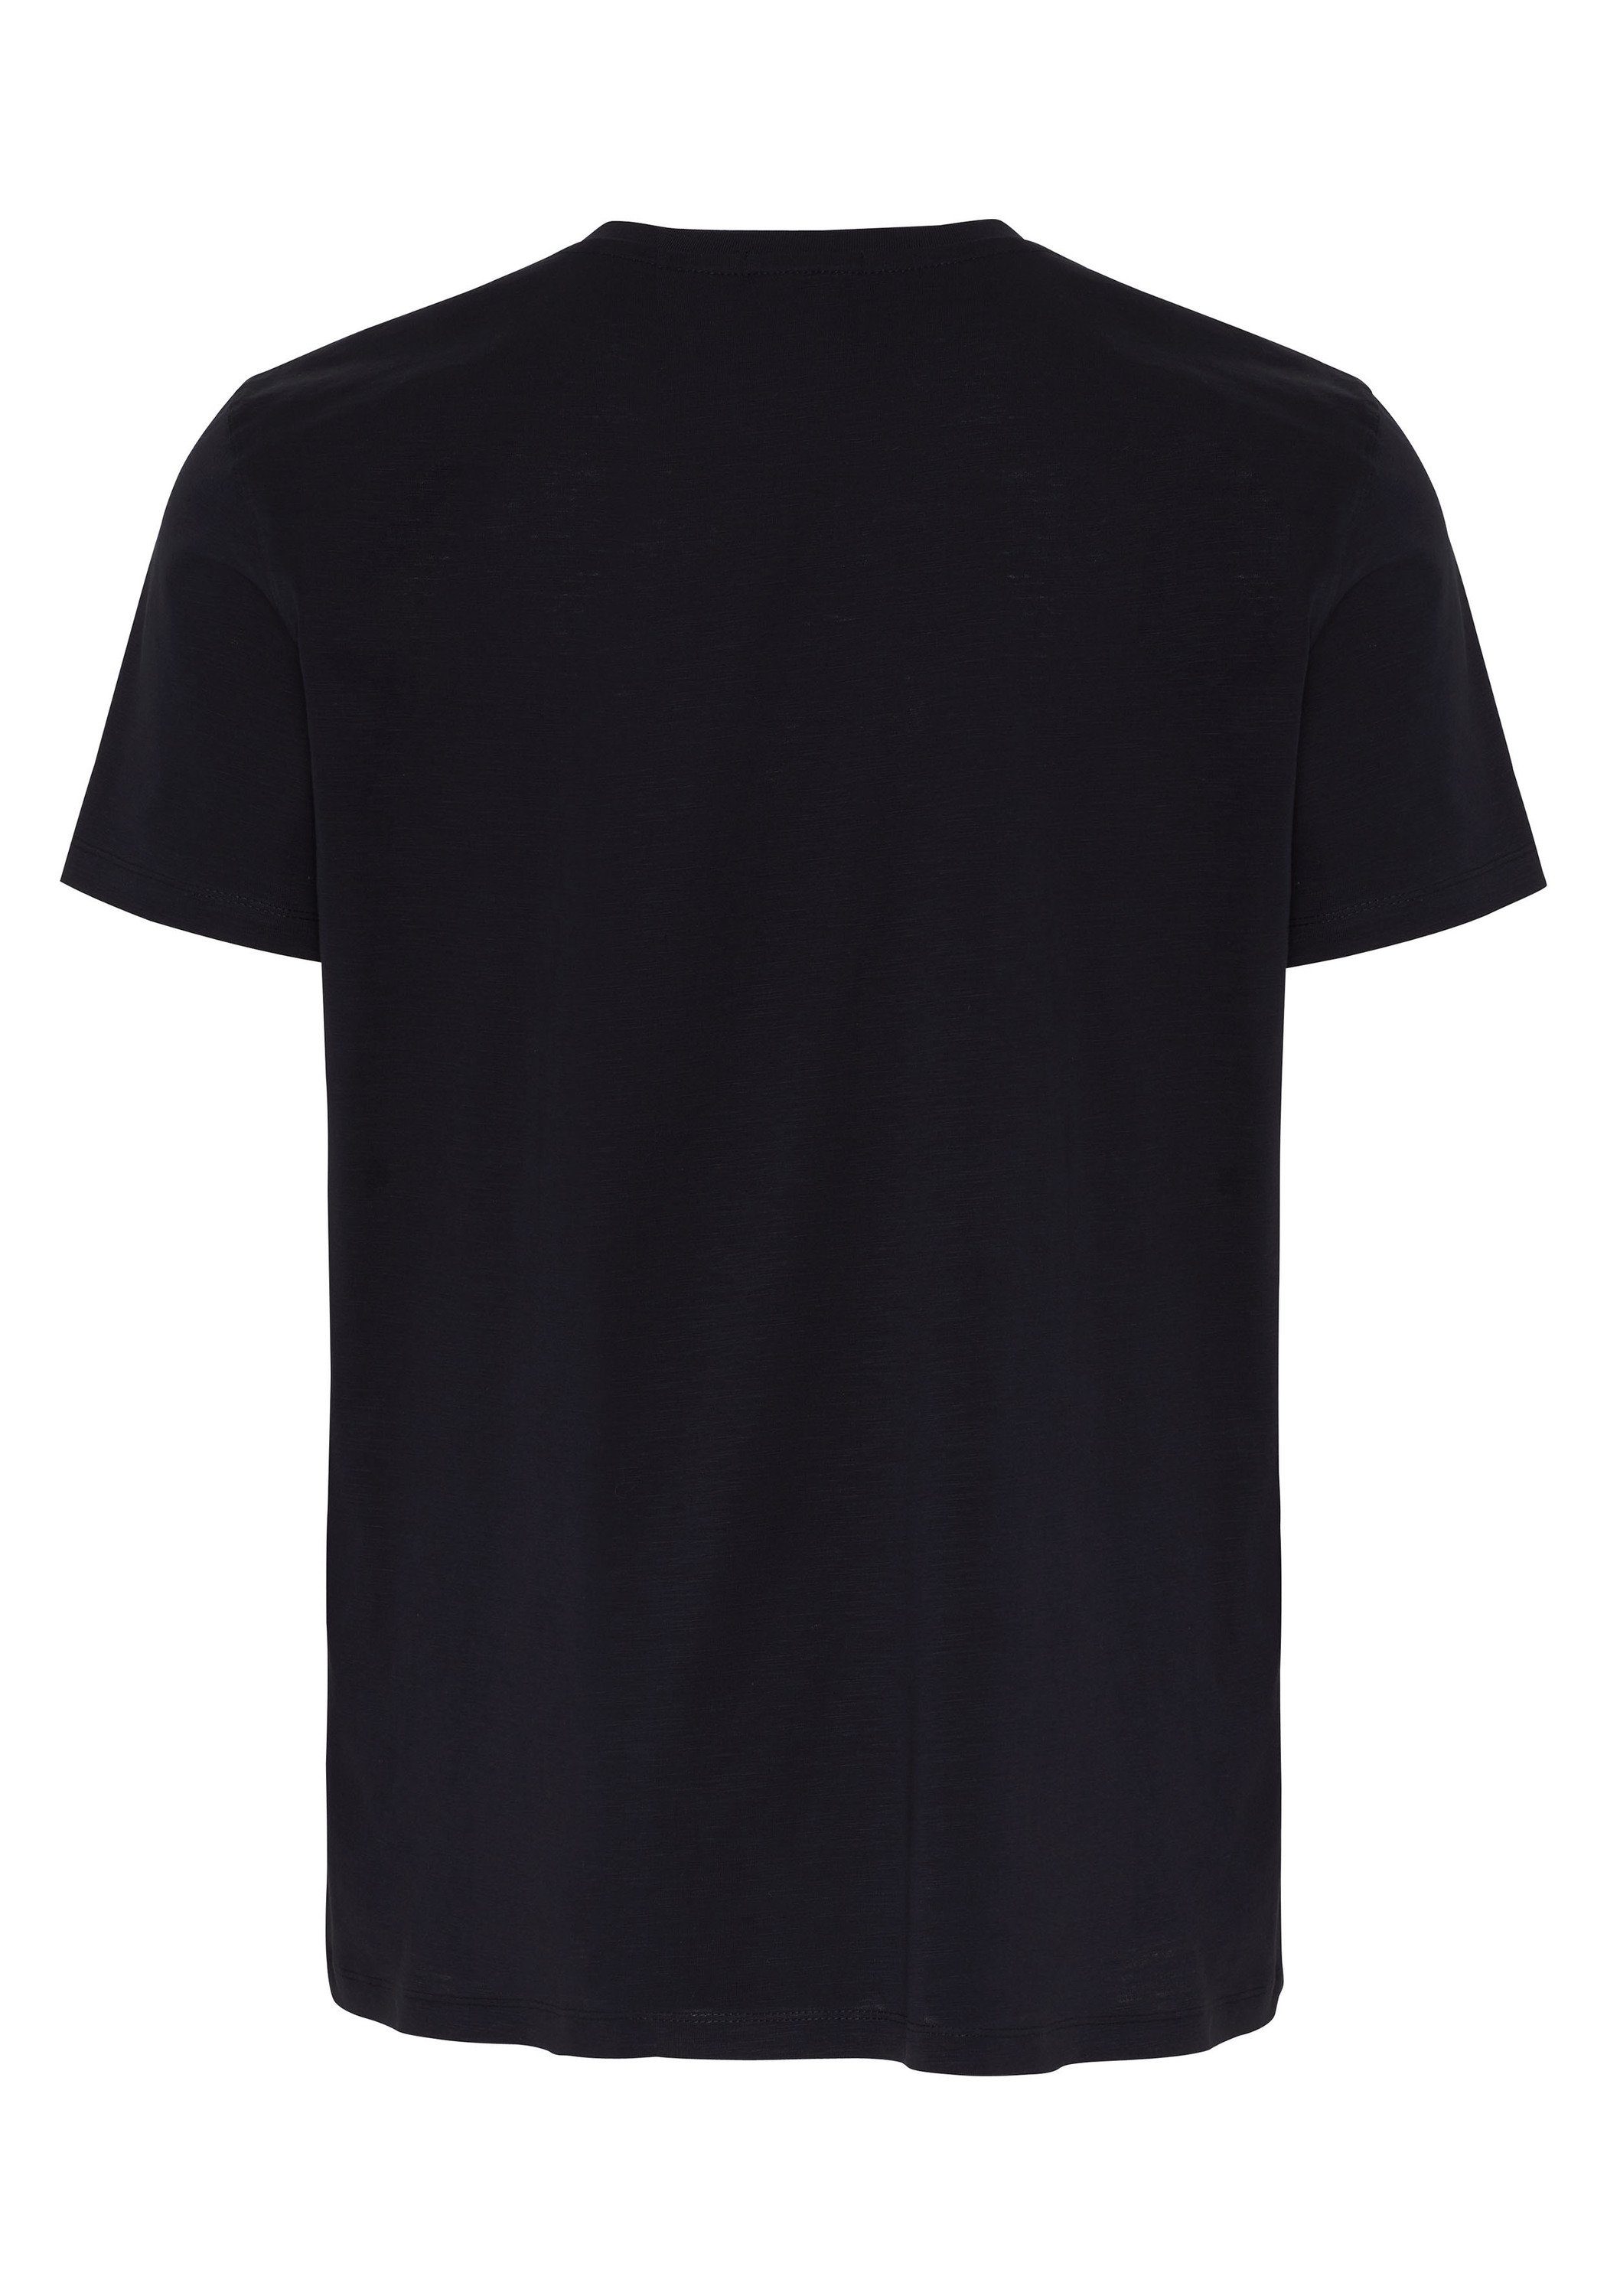 T-Shirt im Black Print-Shirt Chiemsee 1 PLUS-MINUS-Design Deep